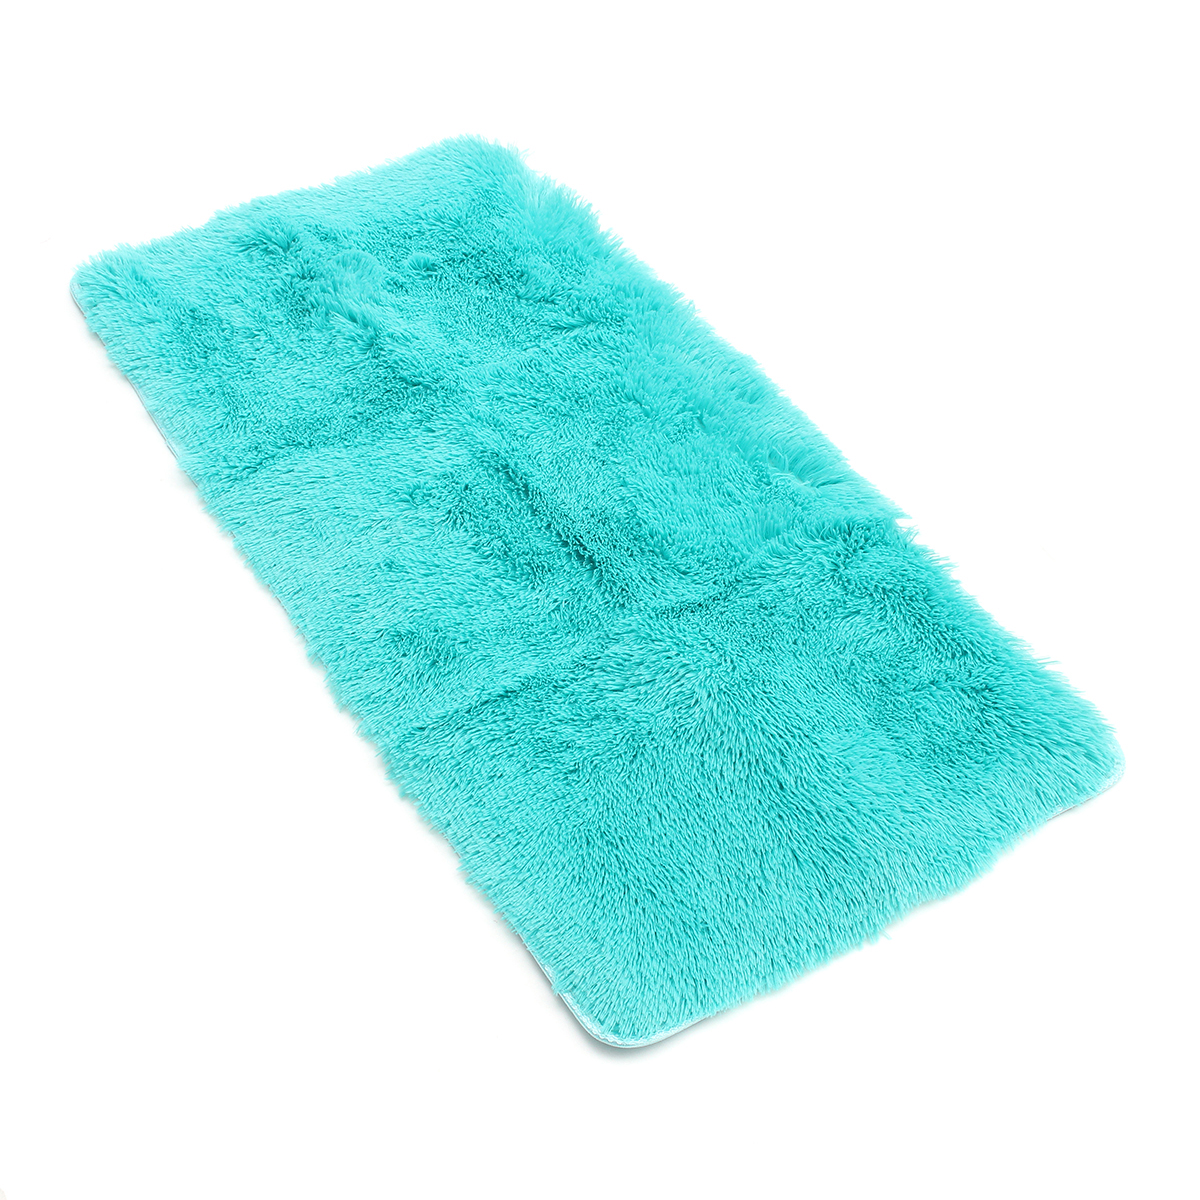 Soft-Fluffy-Rugs-Anti-Skid-Shaggy-Area-Rug-Home-Bedroom-Floor-Area-Carpet-1604512-4